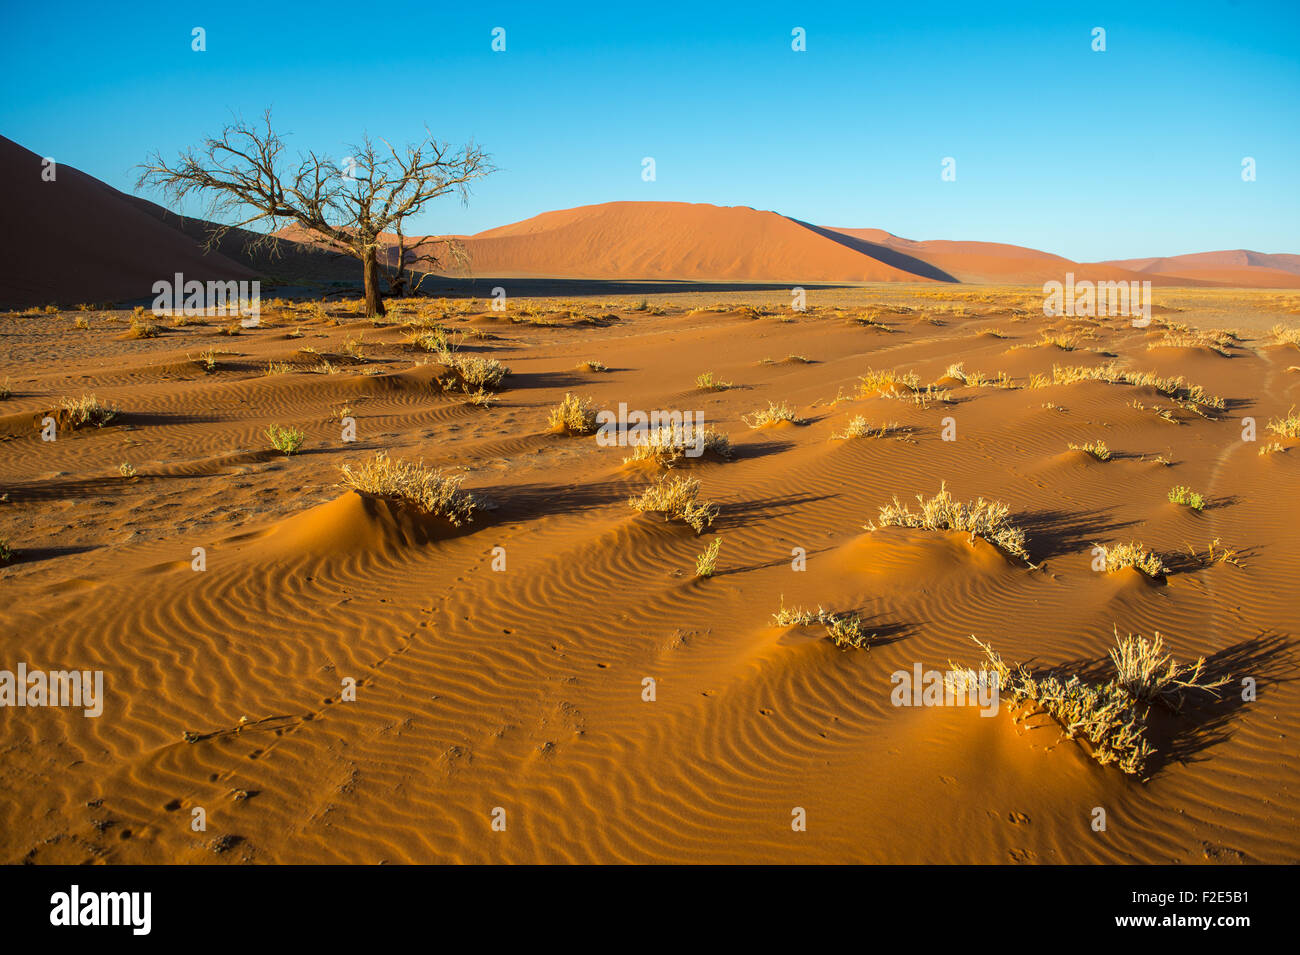 Namibia, Africa - Brush growing in the desert Stock Photo